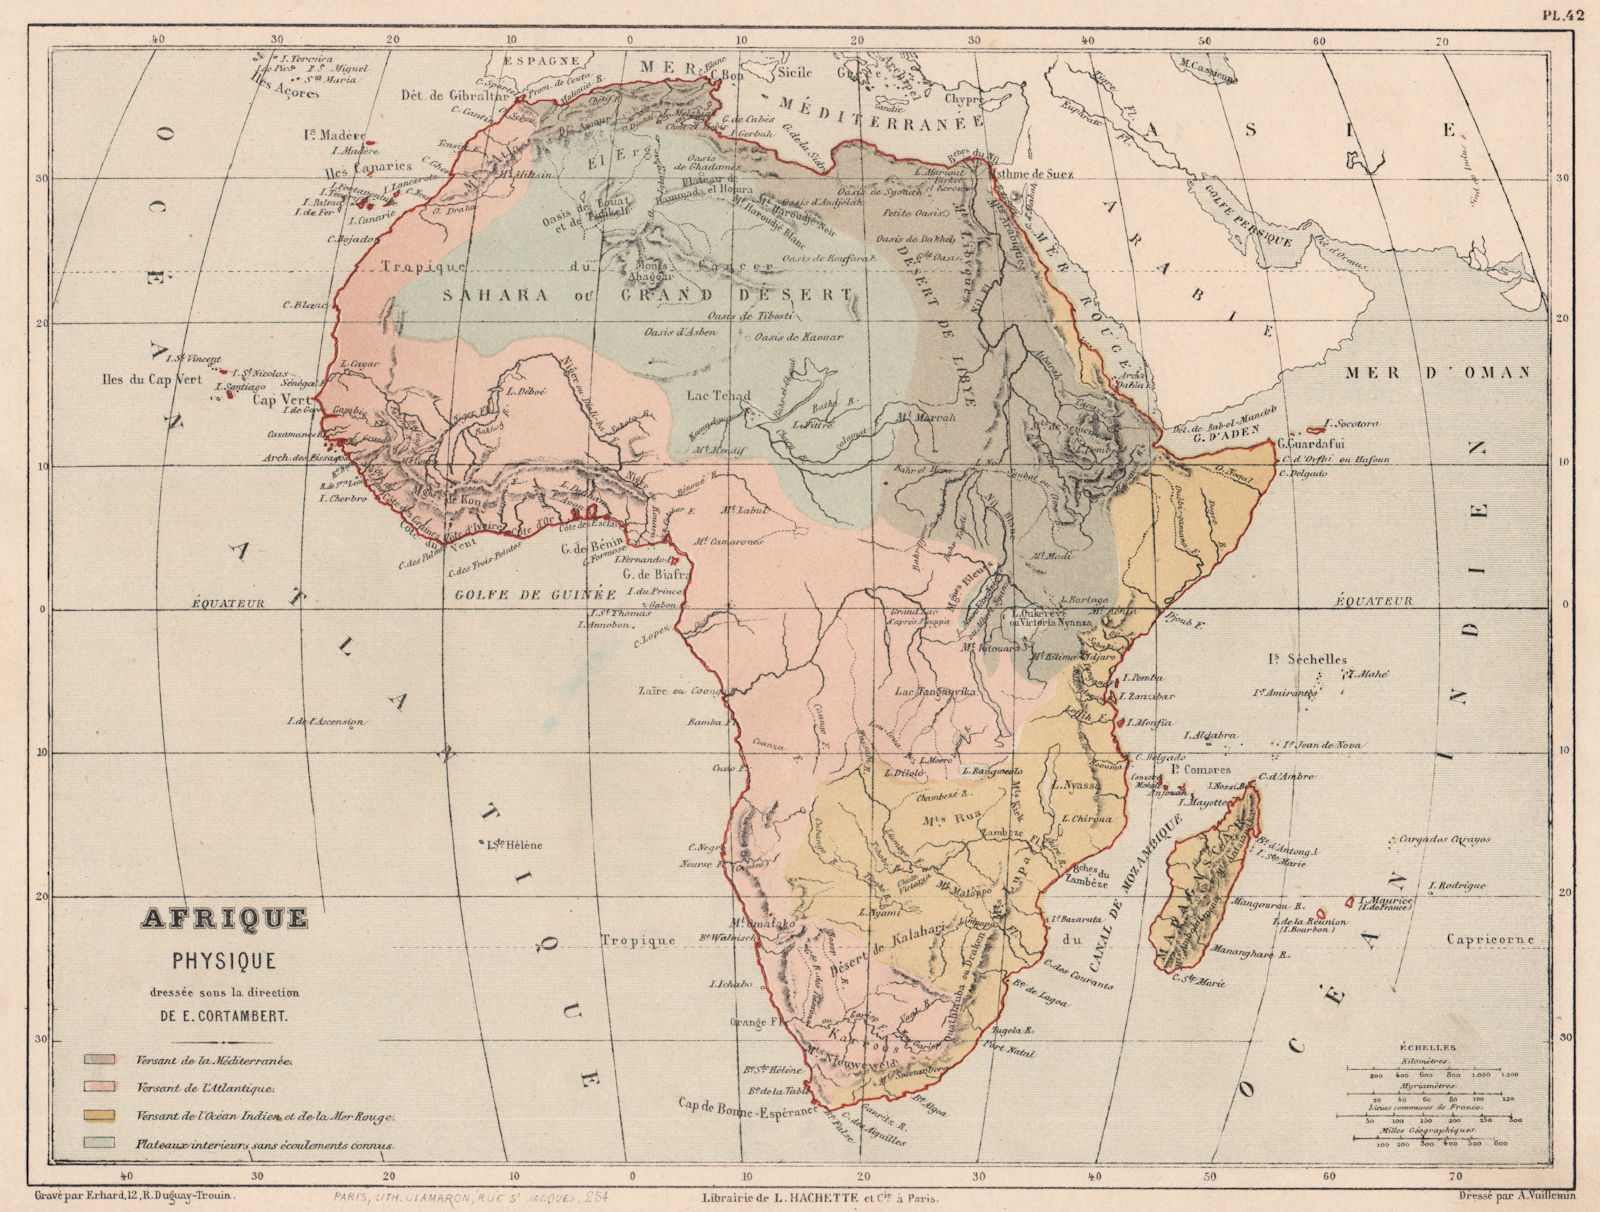 AFRICA WATERSHEDS/drainage divides Atlantic Indian Oceans Mediterranean 1880 map